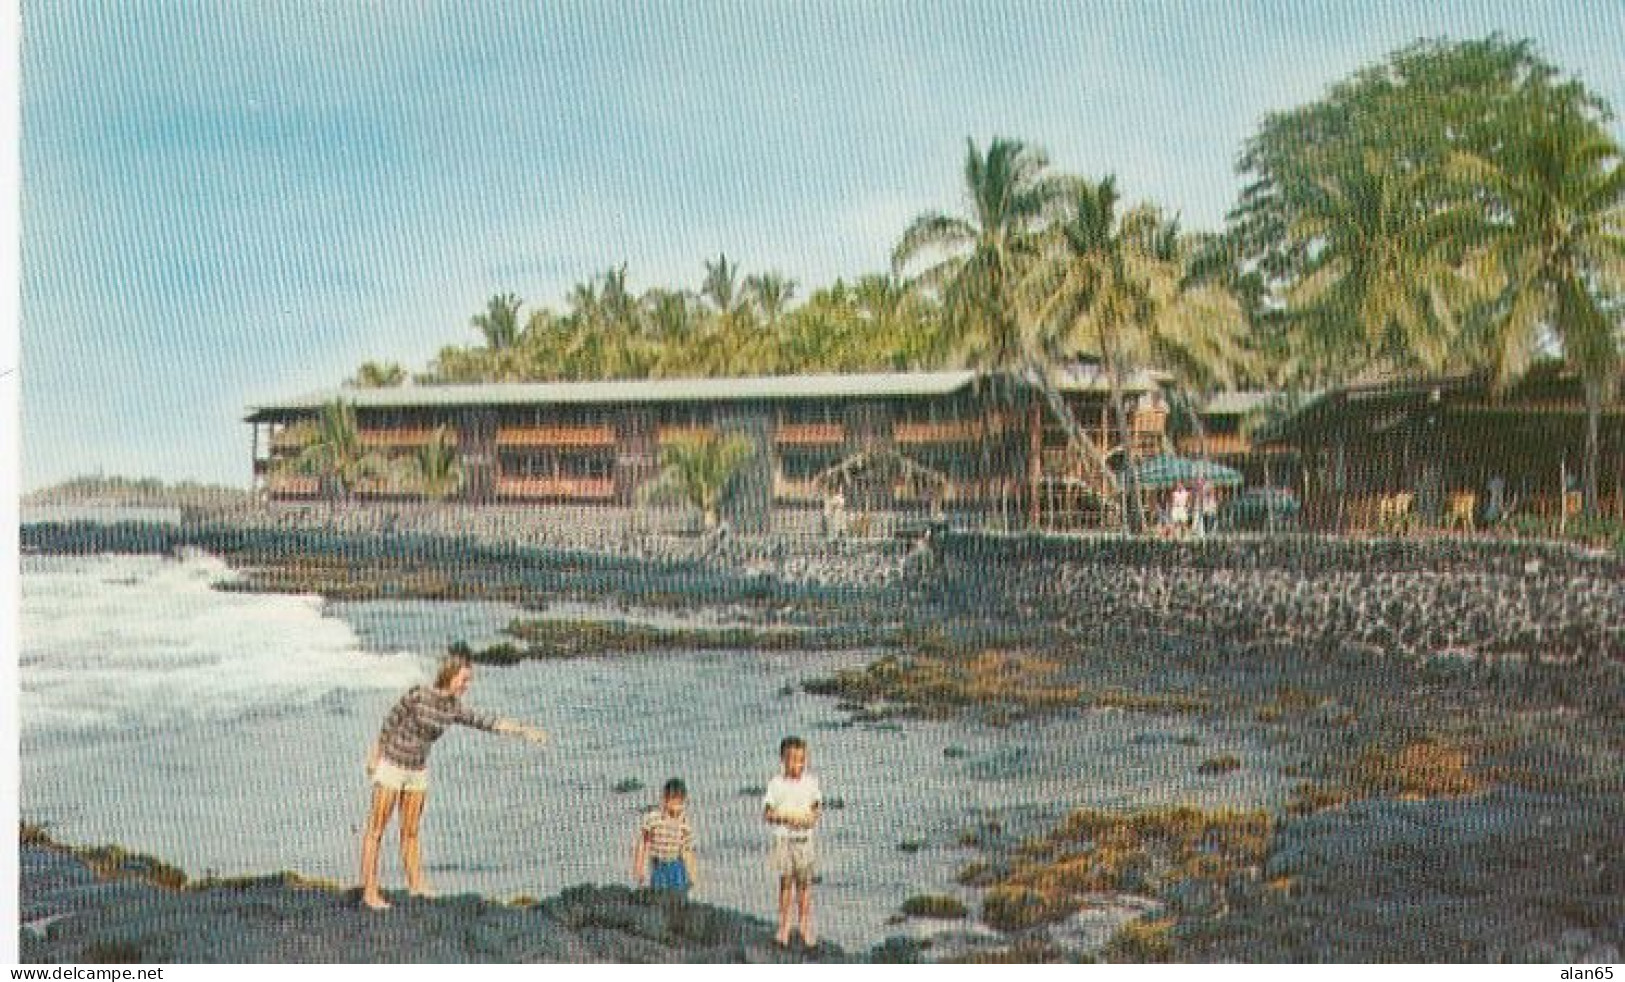 Kona Hawaii, Waiaka Lodge Resort, View Of Family On Rocky Beach, C1950s/60s Vintage Postcard - Big Island Of Hawaii